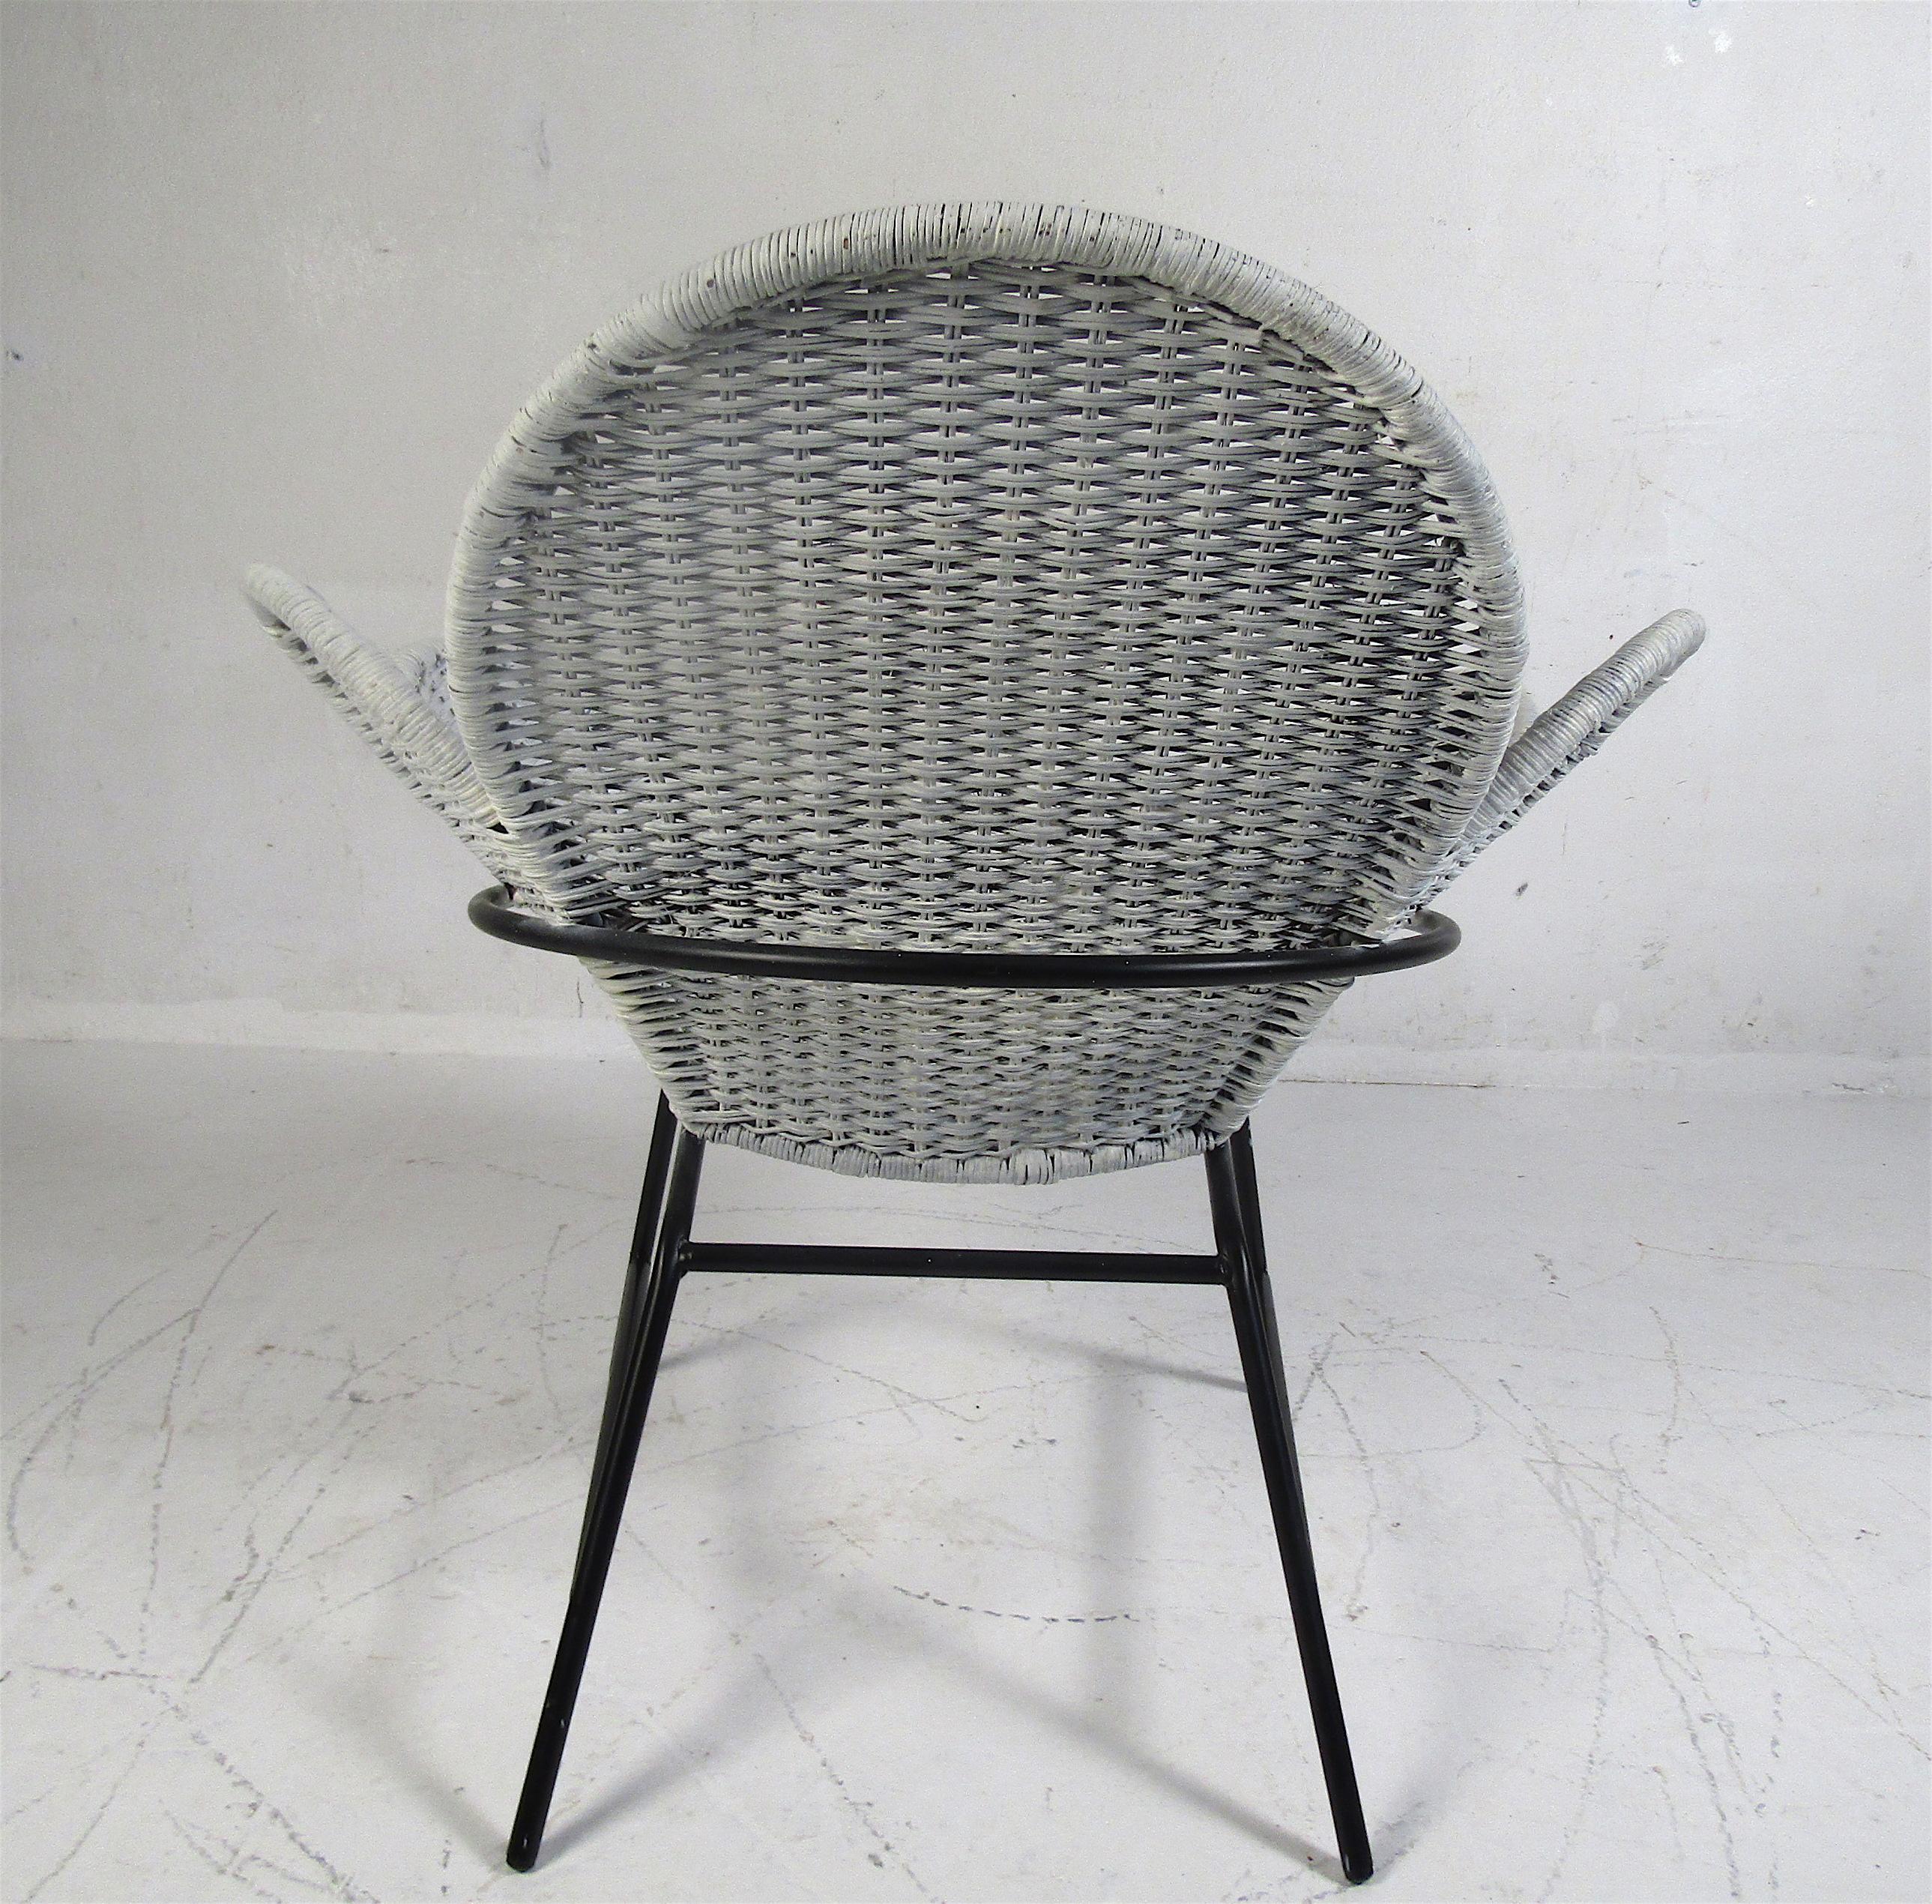 Late 20th Century Midcentury Rattan Wicker Tulip Chair